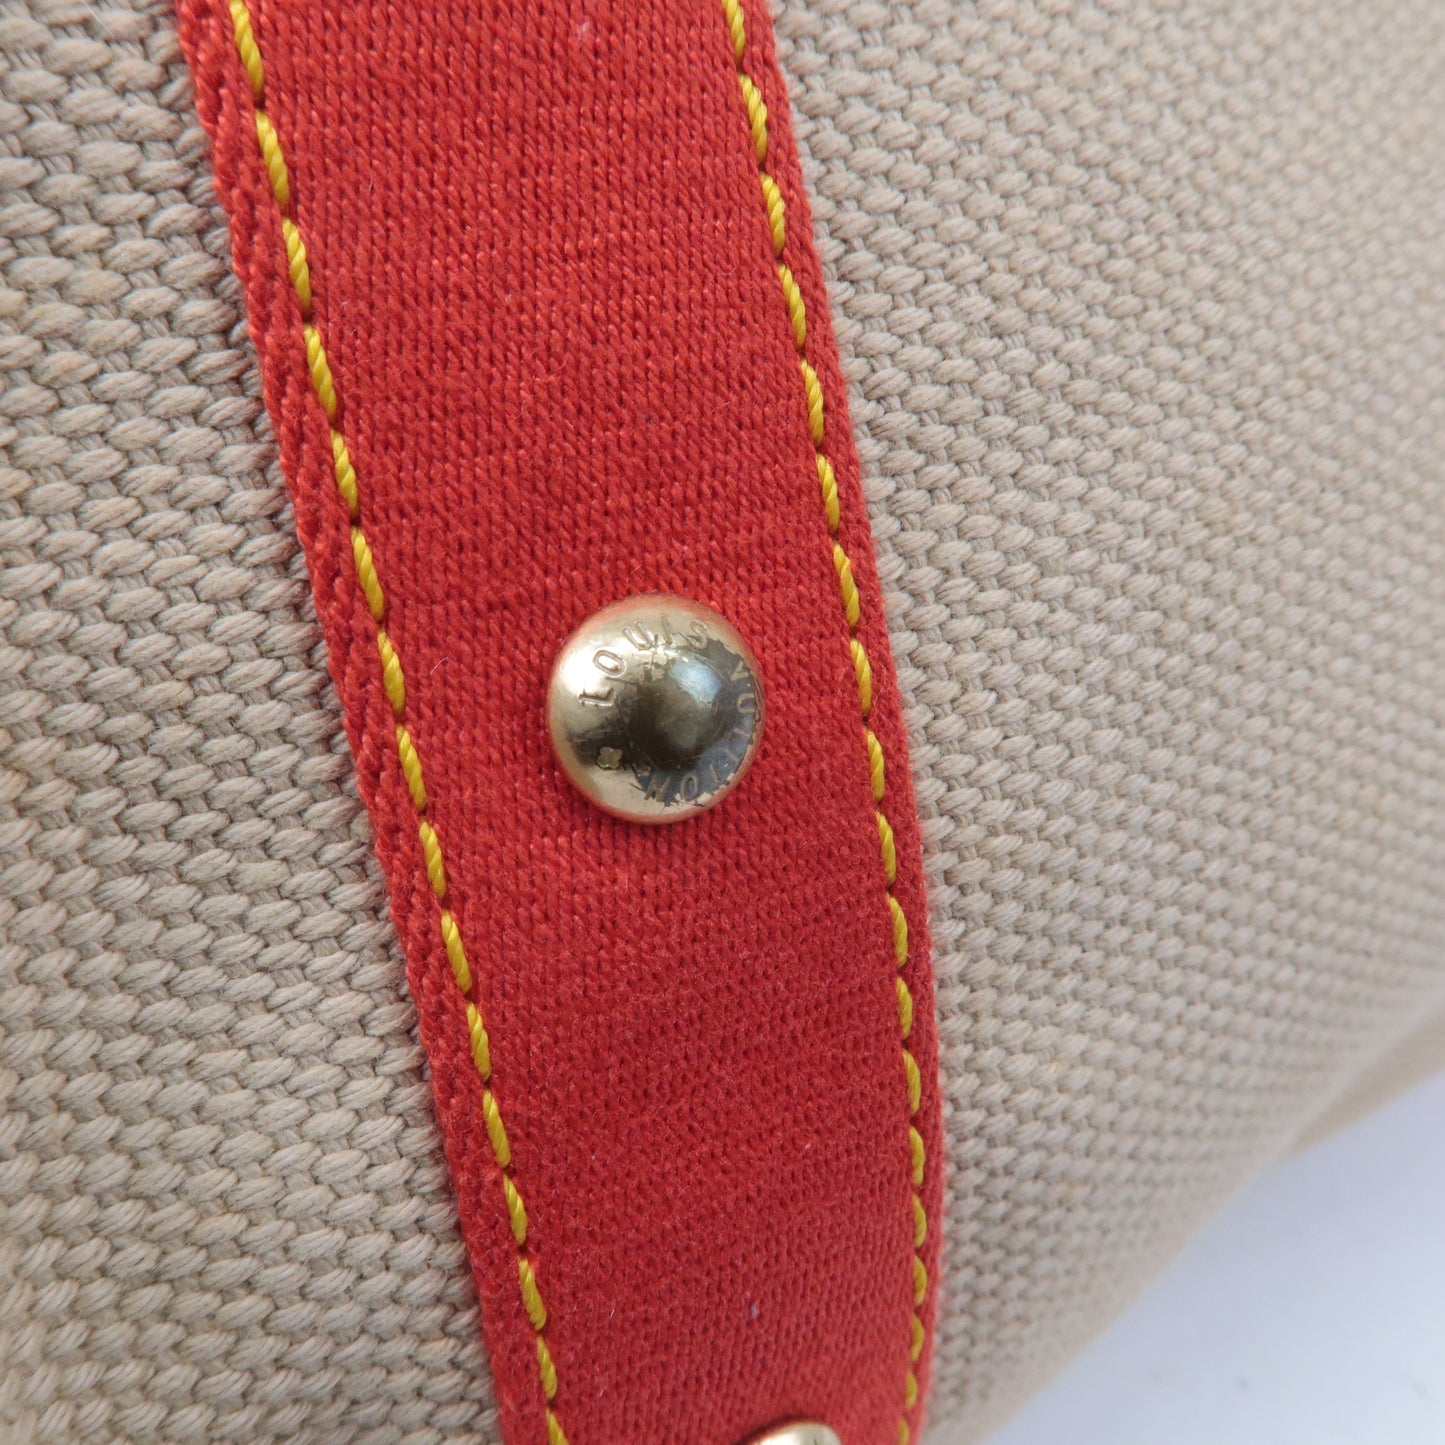 Louis Vuitton Antigua Cabas MM Tote Bag Hand Bag Rouge M40035